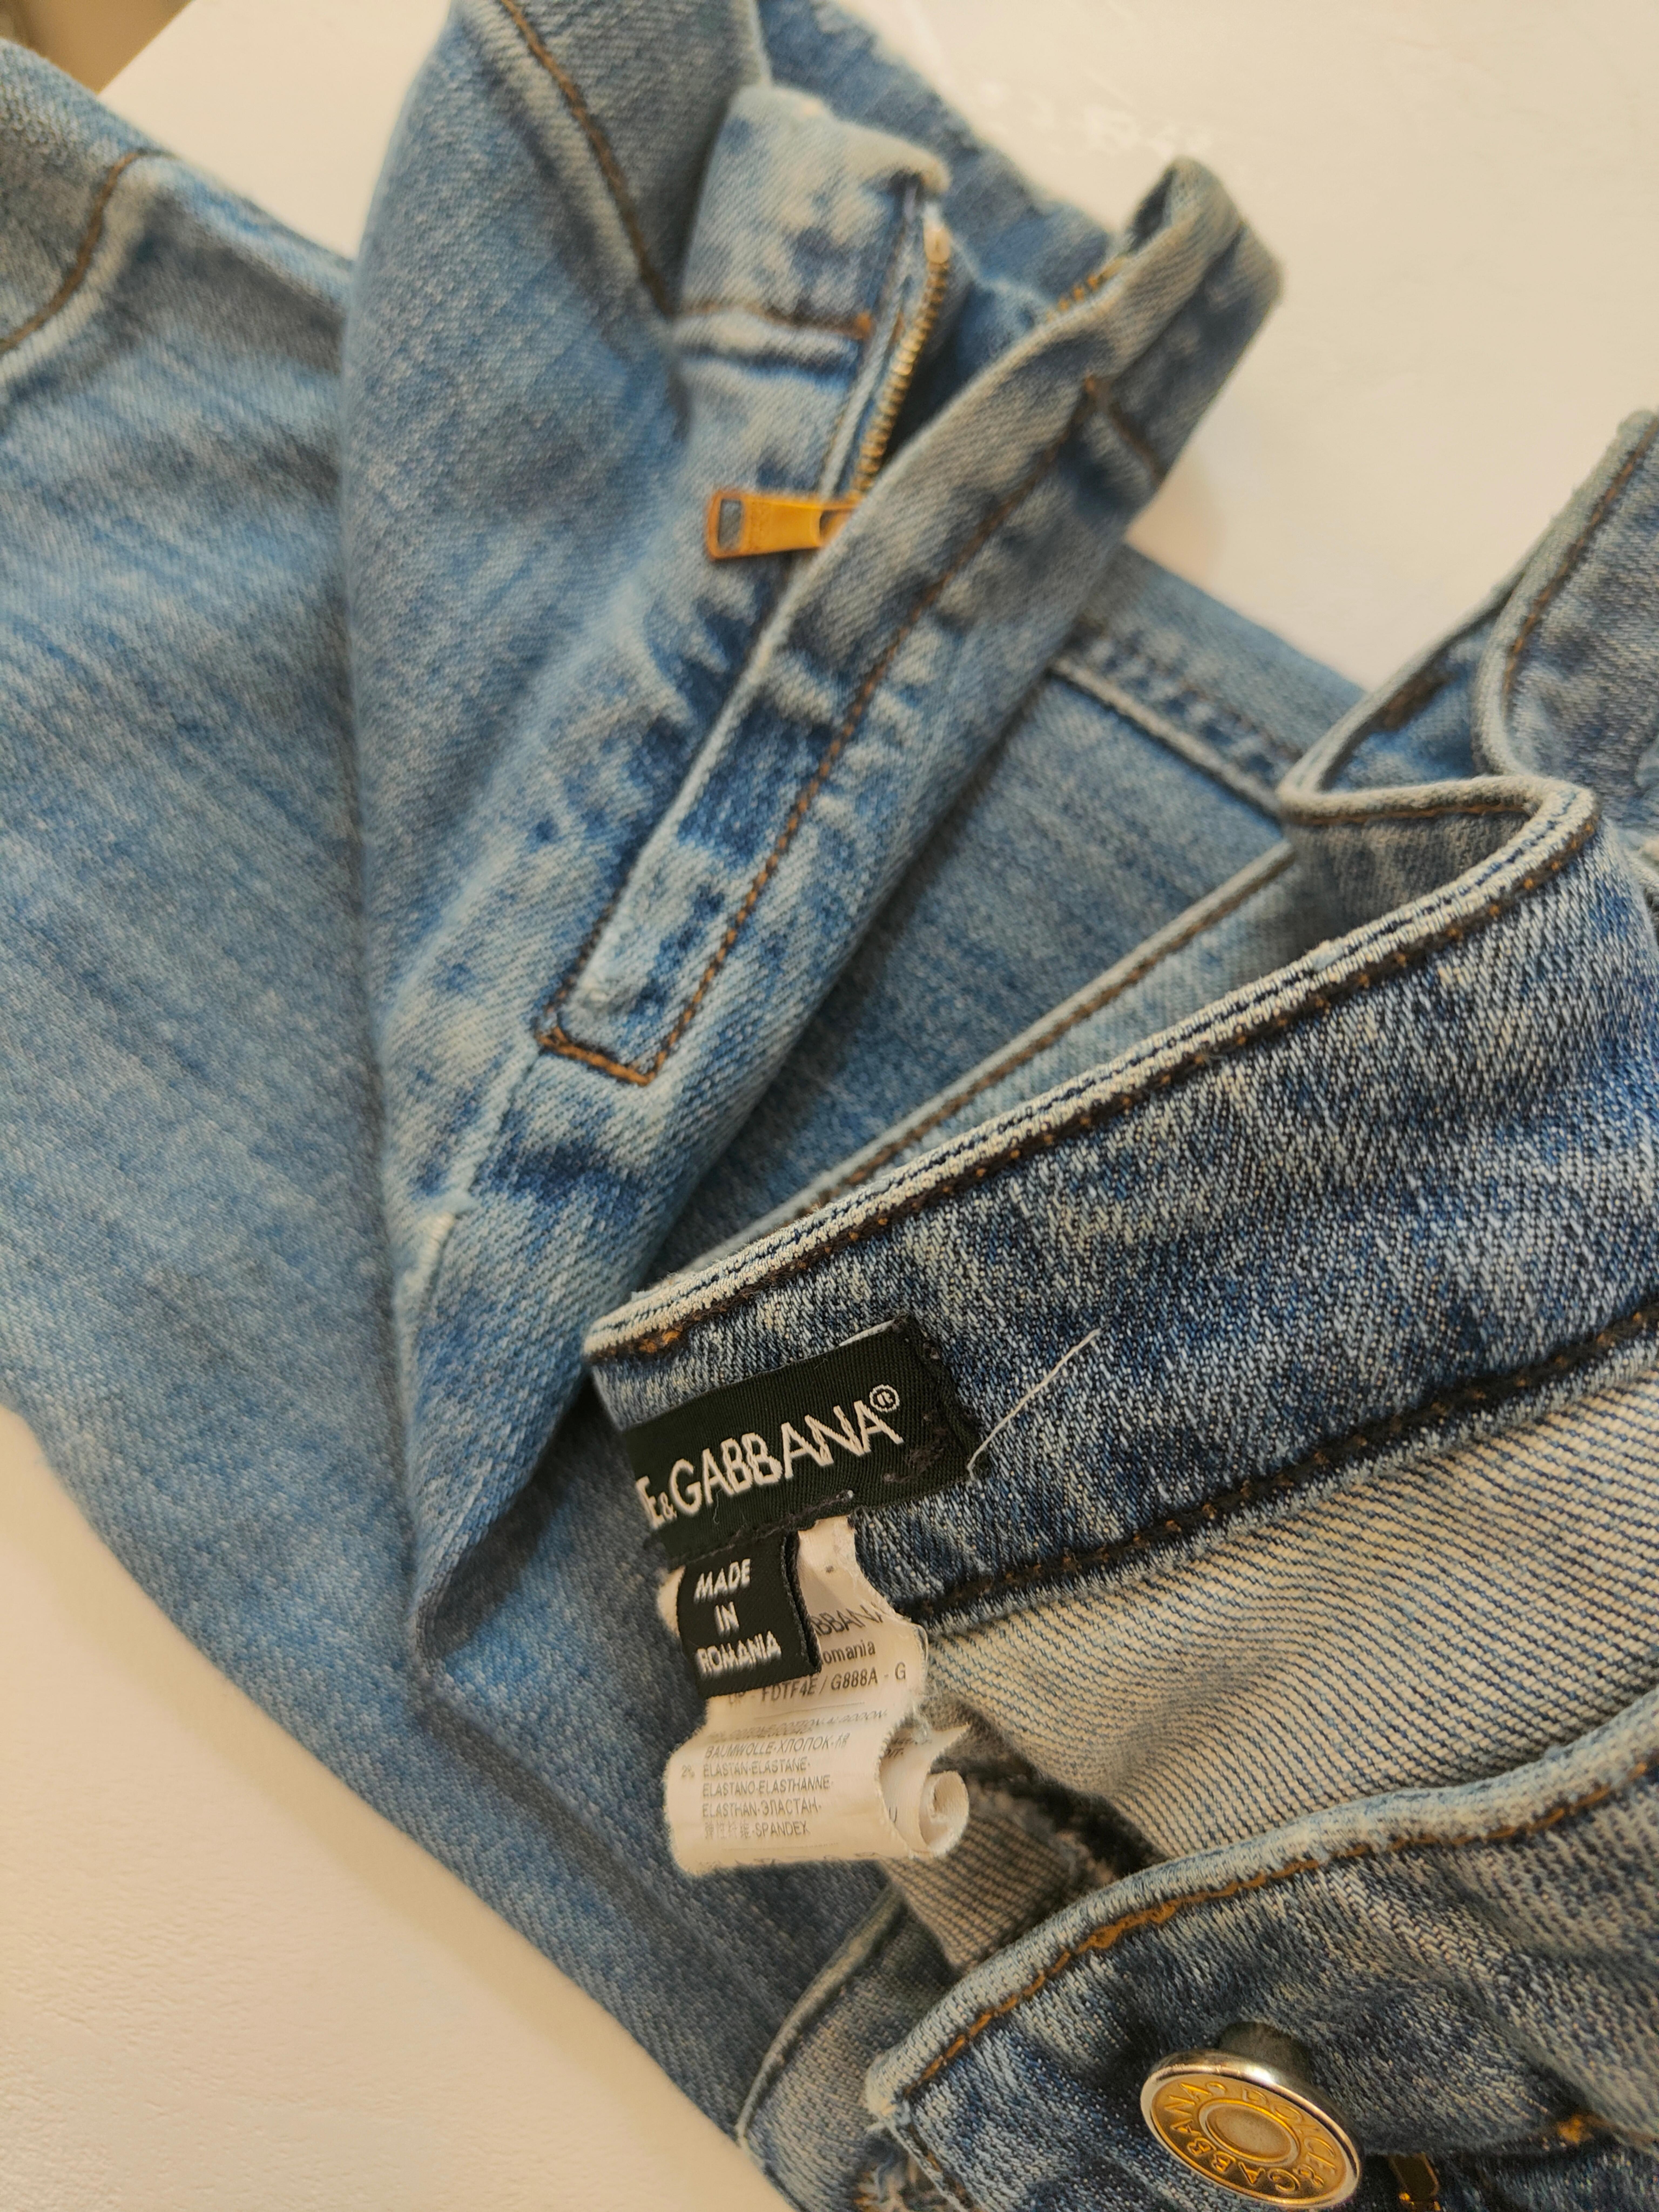 Dolce & Gabbana denim jeans In Excellent Condition For Sale In Capri, IT